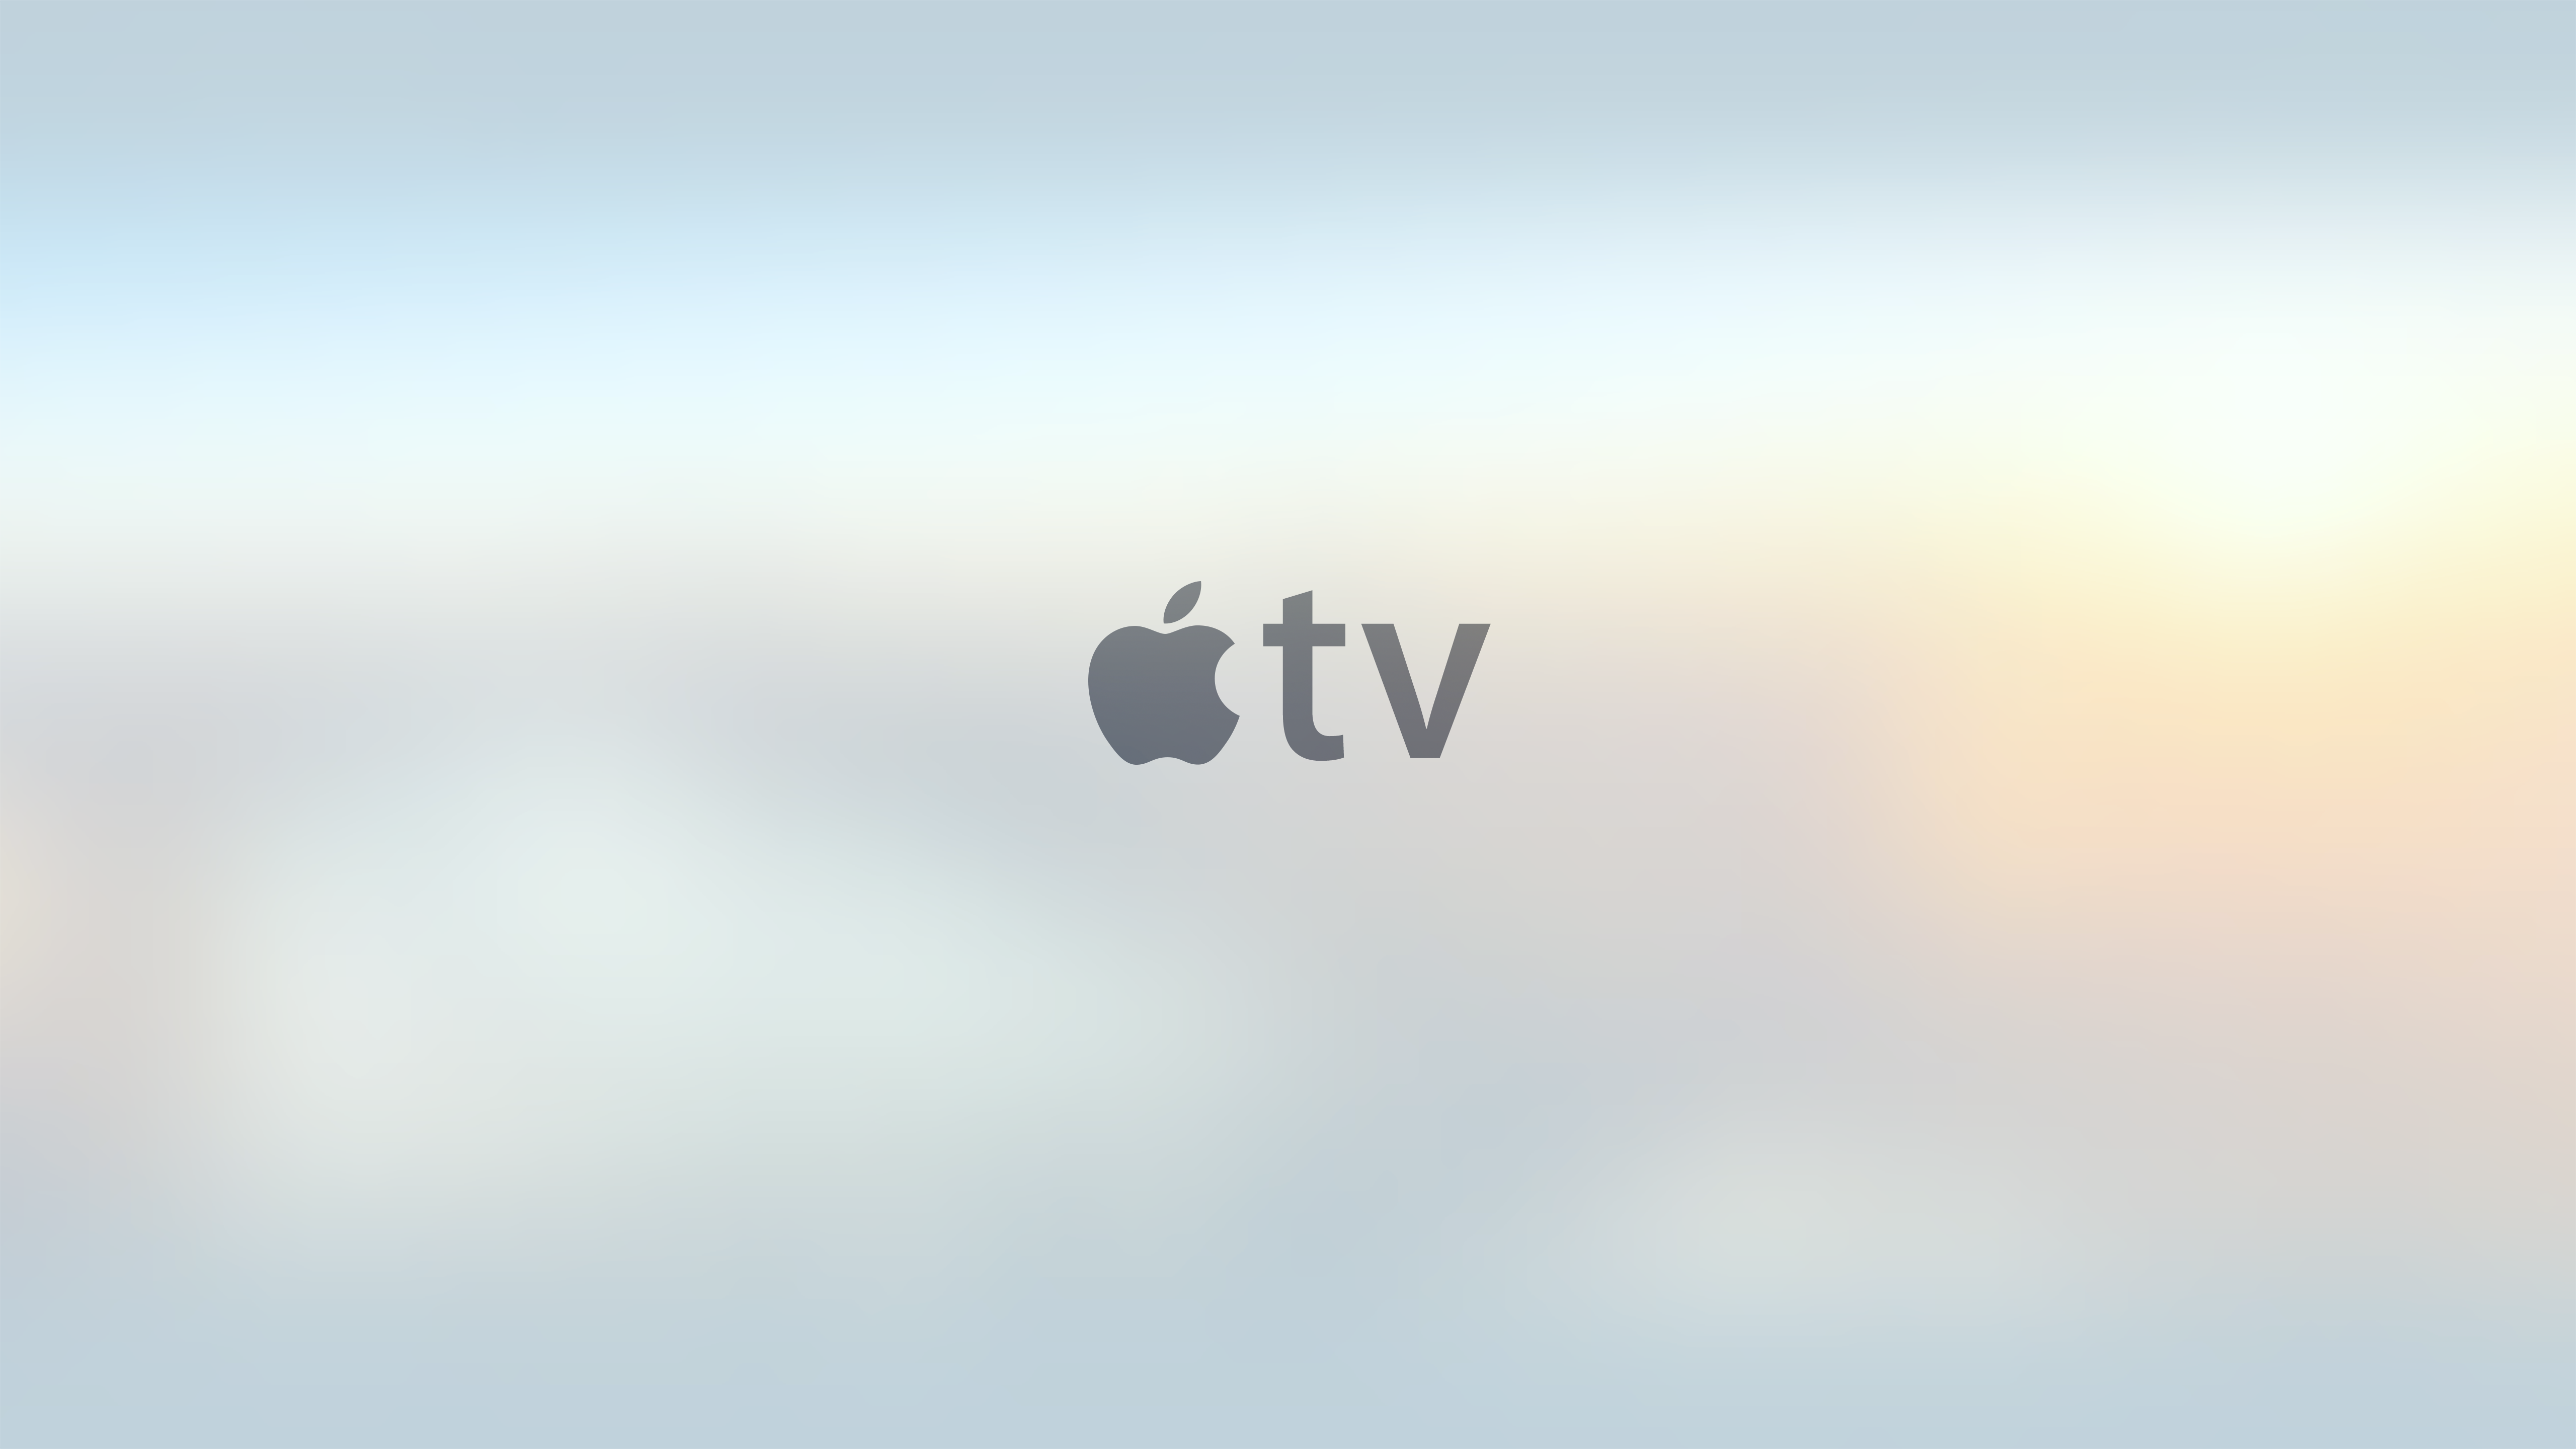 Apple-TV-London-5120x2880-wallpaper.png